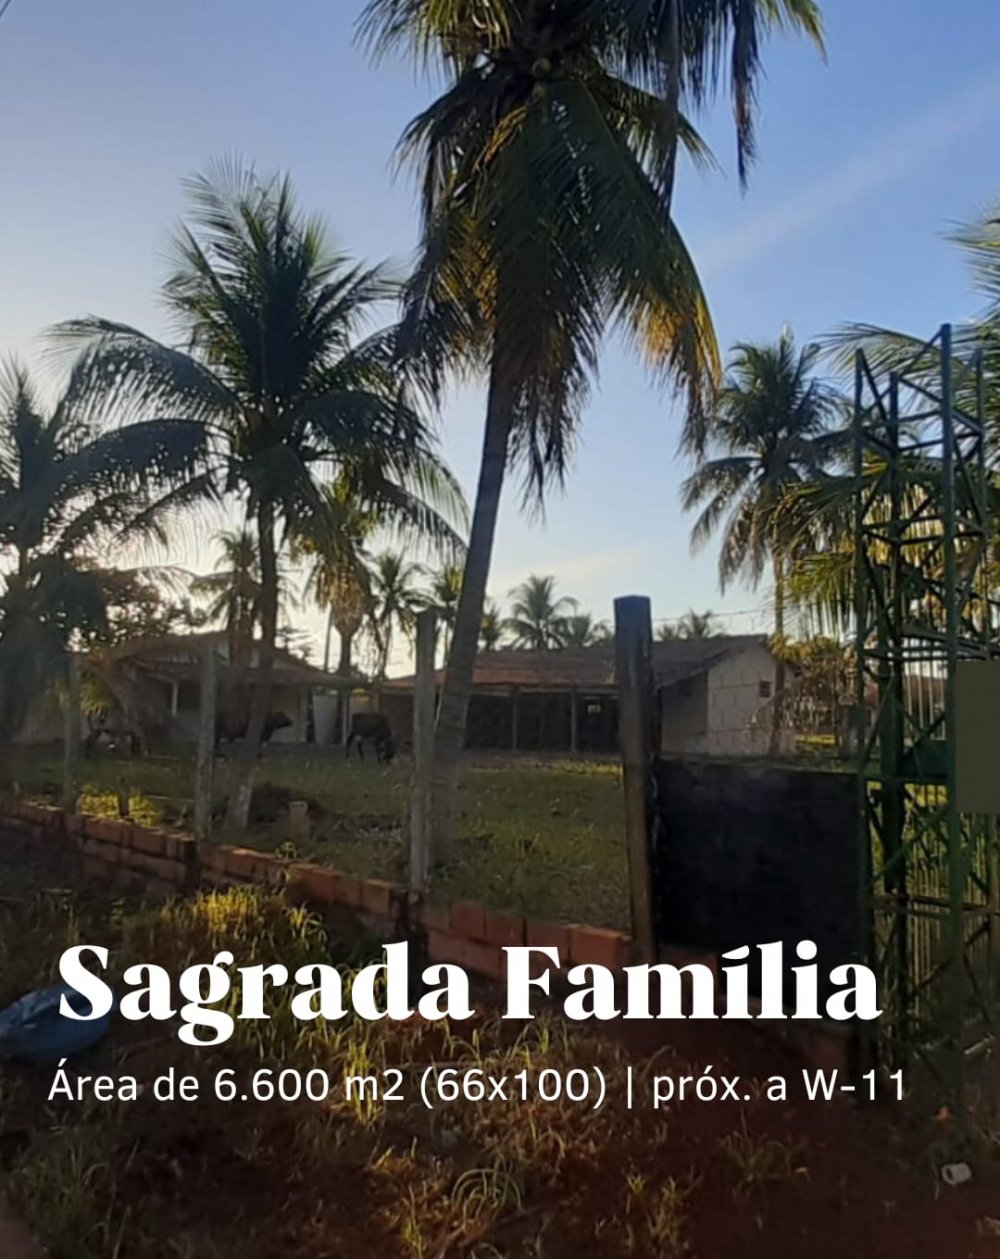 Terreno - Venda - Sagrada Famlia - Rondonpolis - MT